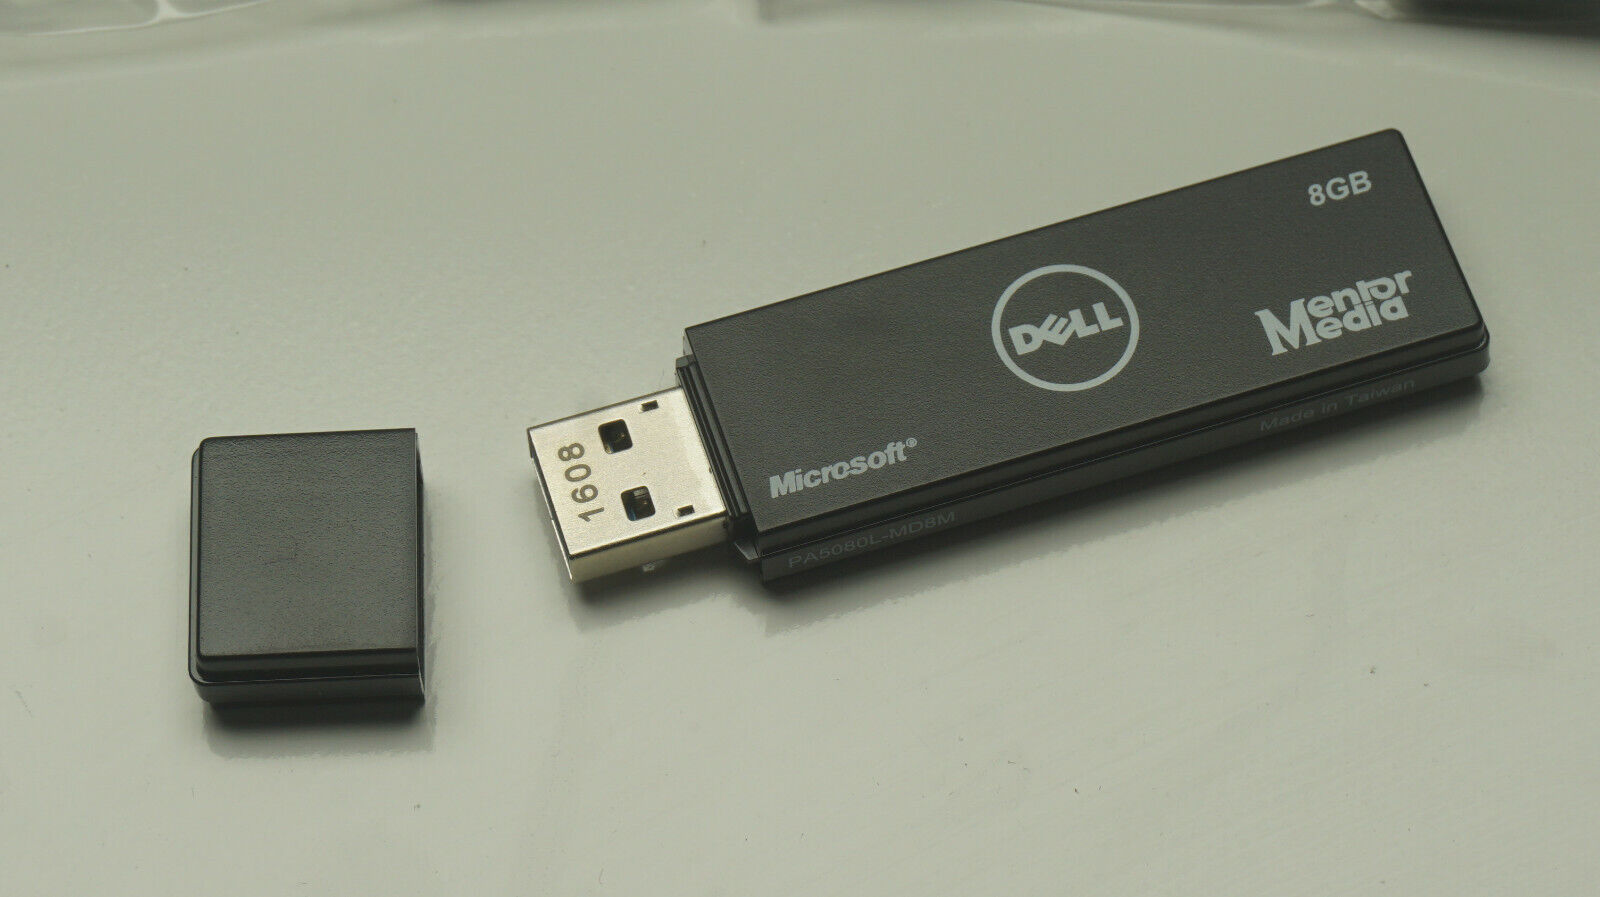 Dell Windows 7 Home Premium OS Recovery Restore Media USB Stick 8GB, 6WJ1J 64bit